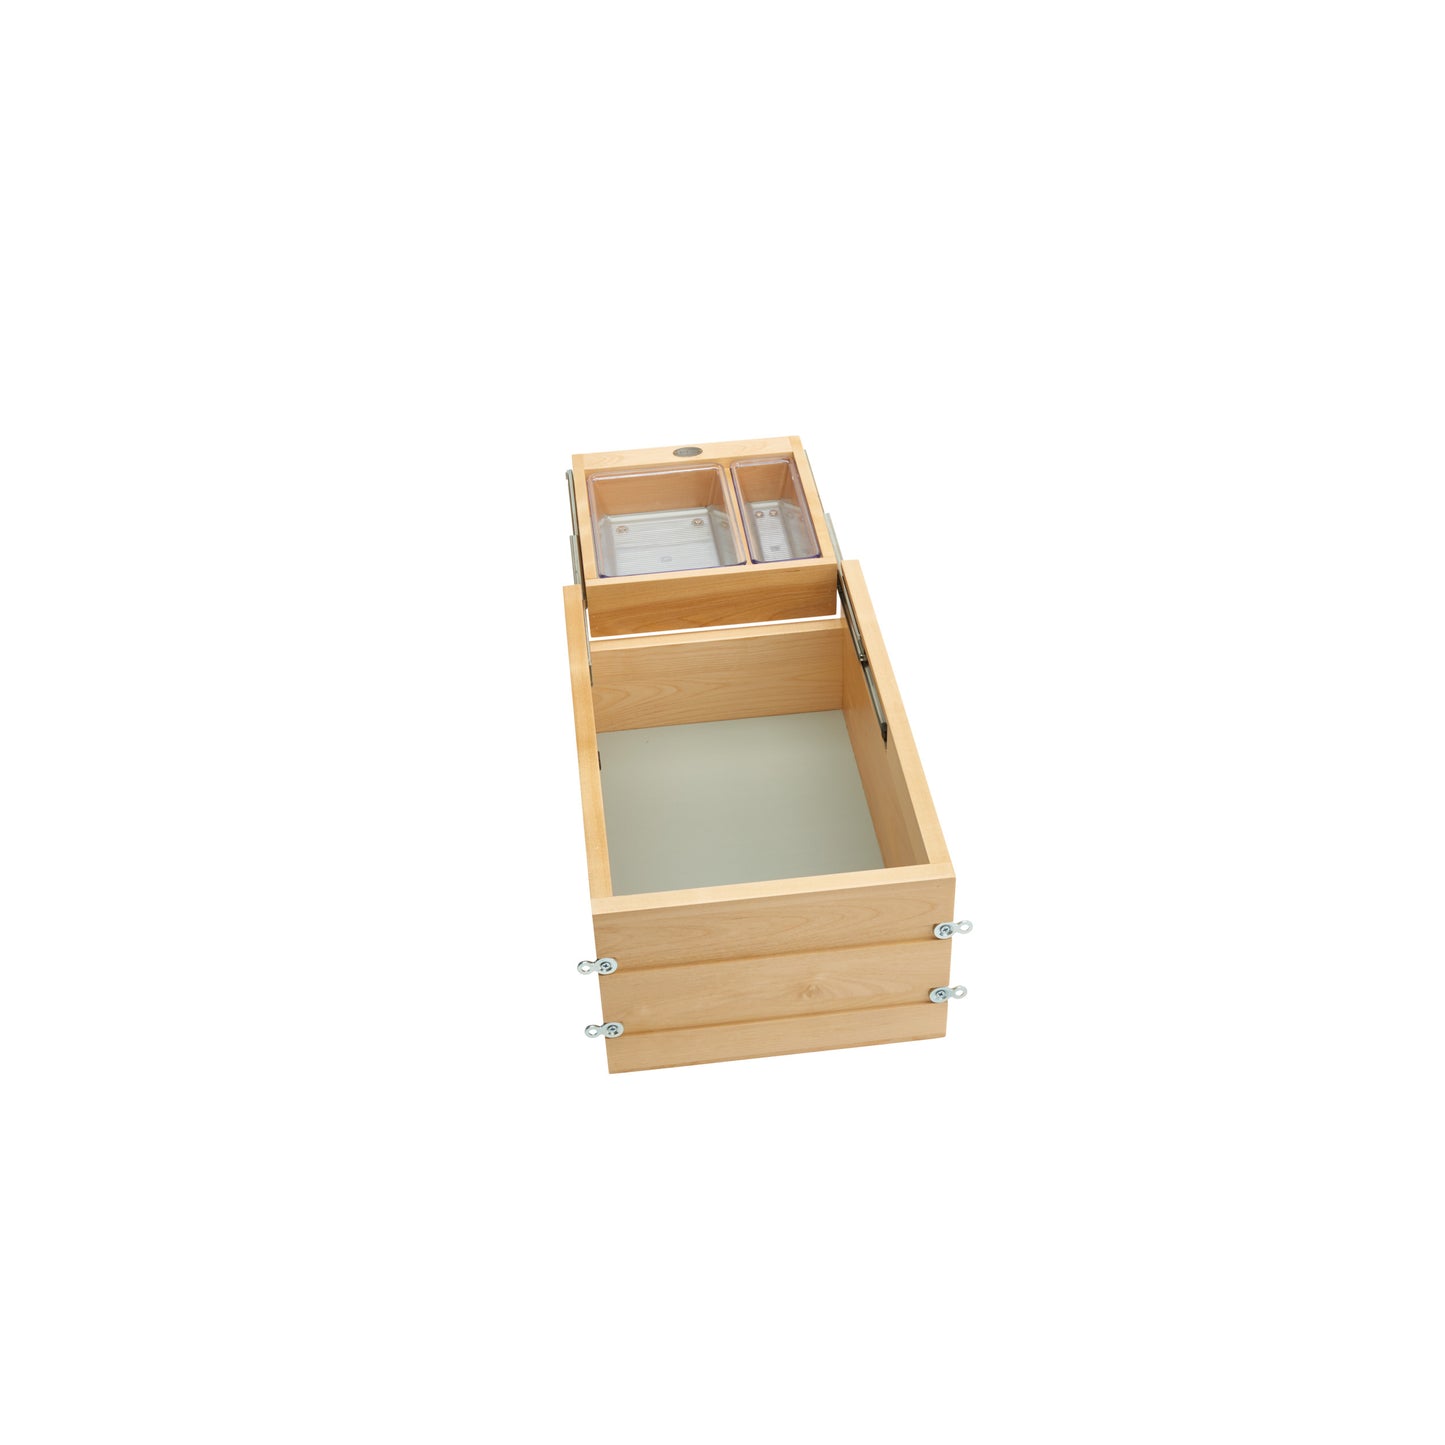 Rev-A-Shelf / 4VDOHT-343FLSC-1 / Wood Vanity Cabinet Replacement Half Tier Drawer System w/Soft Close